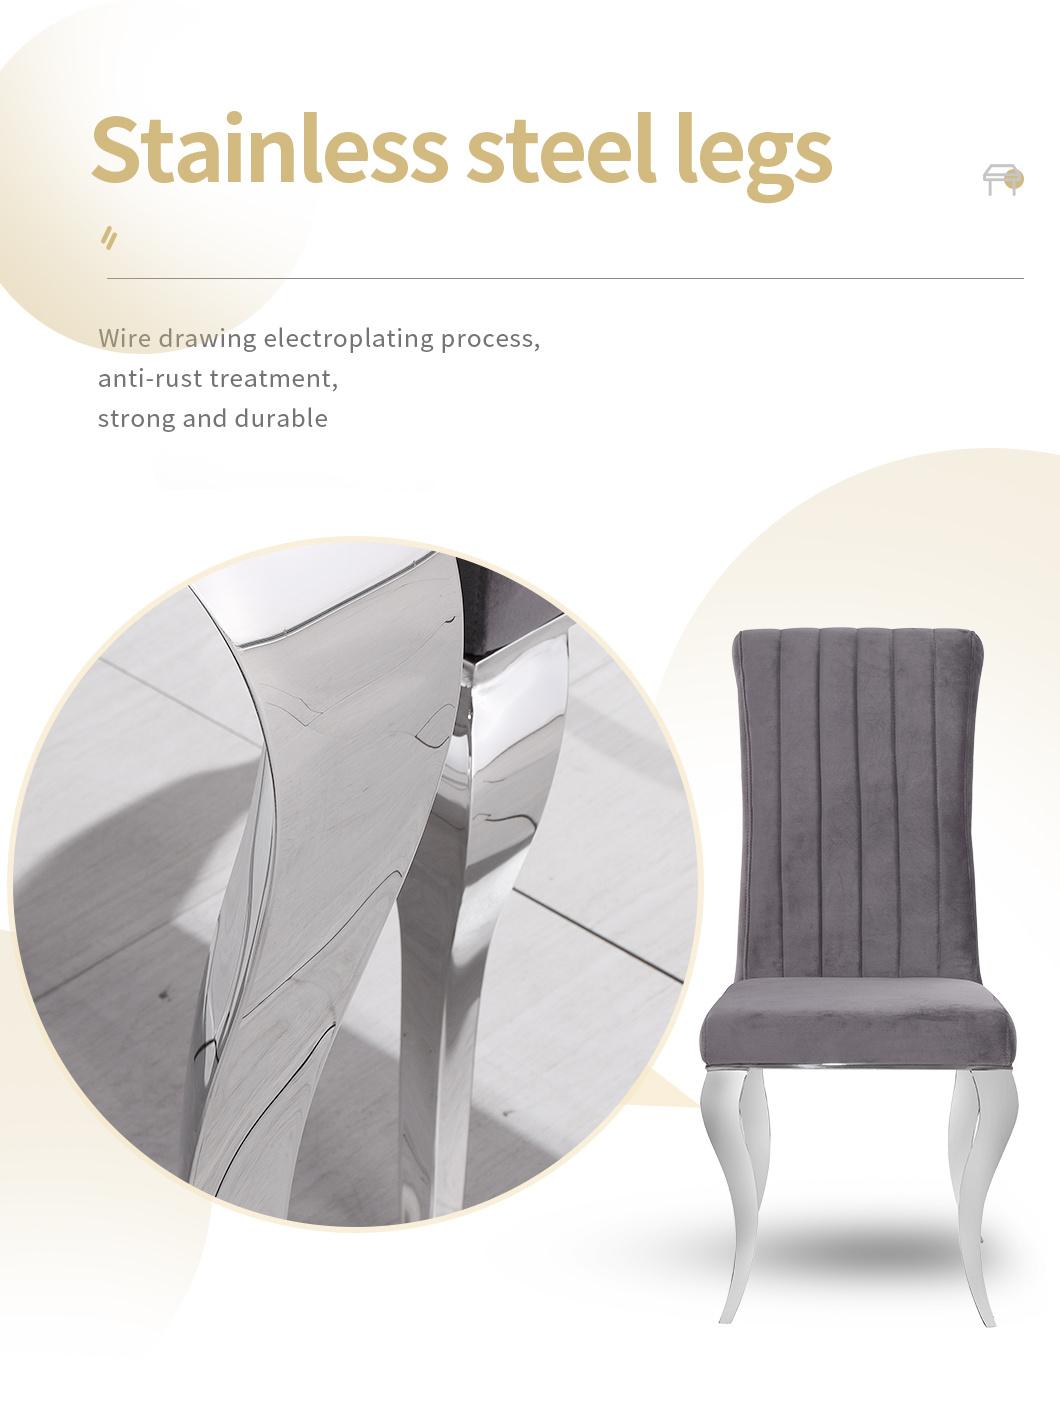 Diron Fabric Carton Box Customized China Acrylic Chair Home Furniture